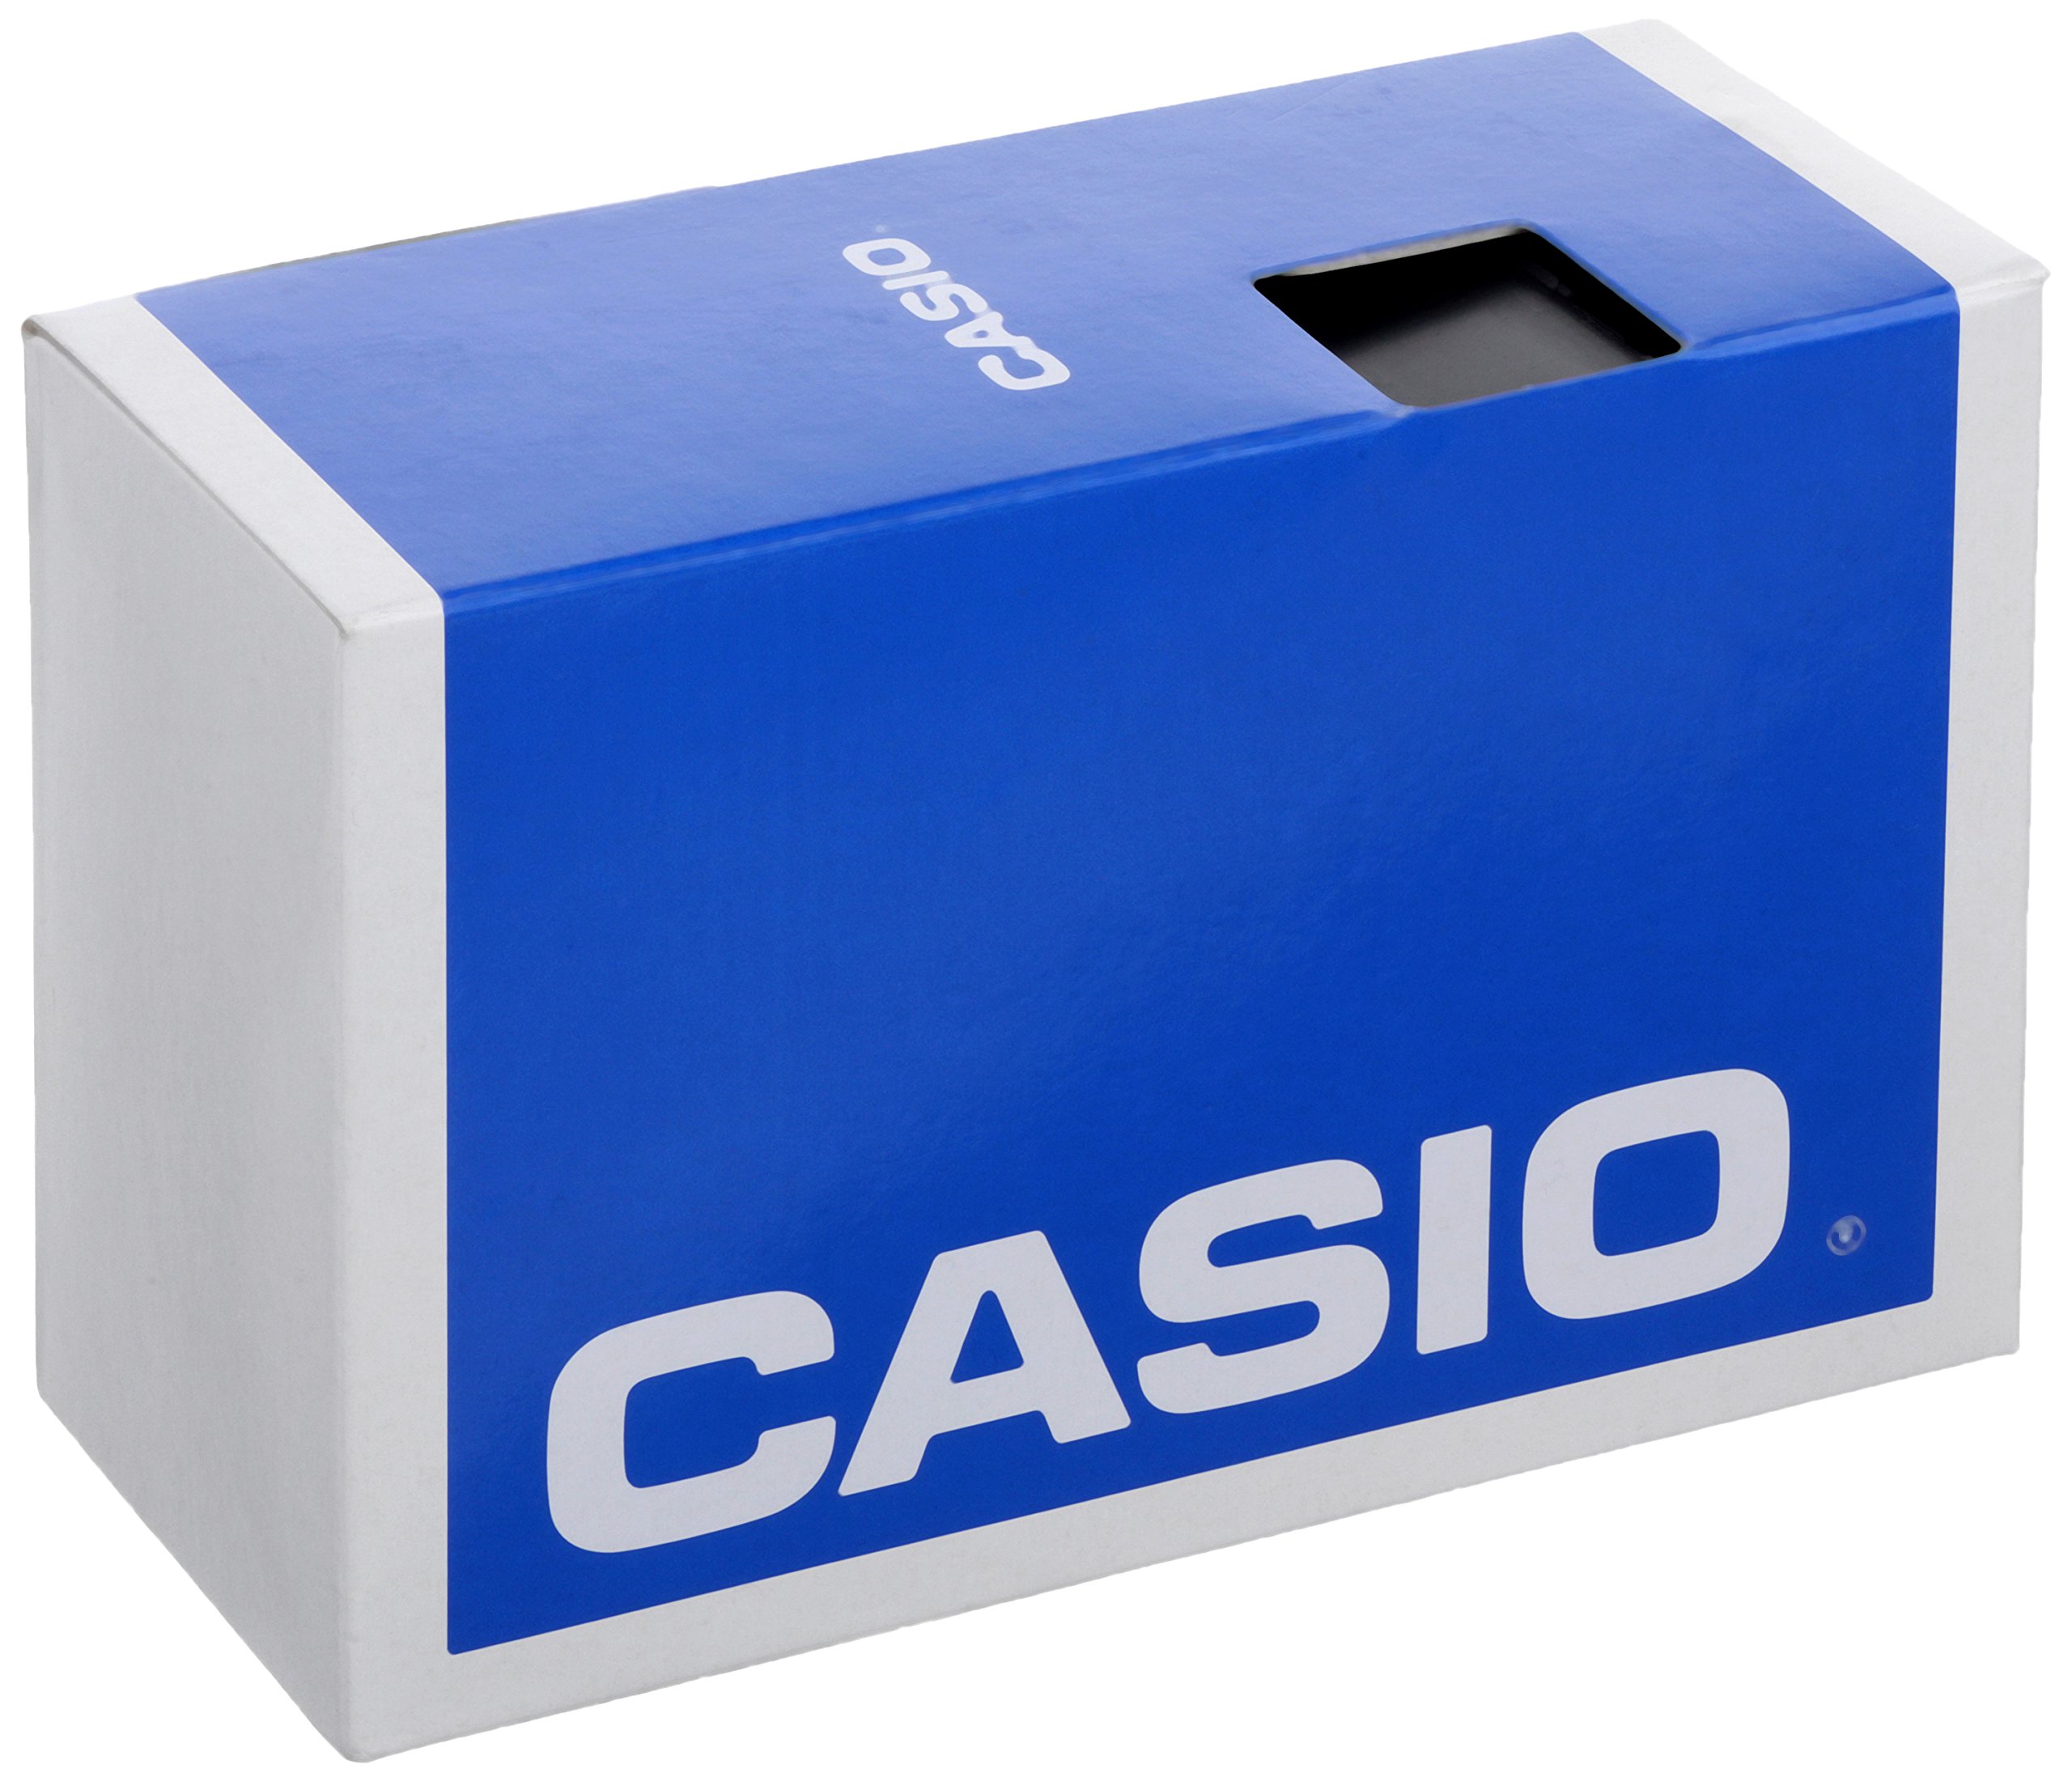 Casio Women's LTP1254D-1A Classic Analog Bracelet Watch